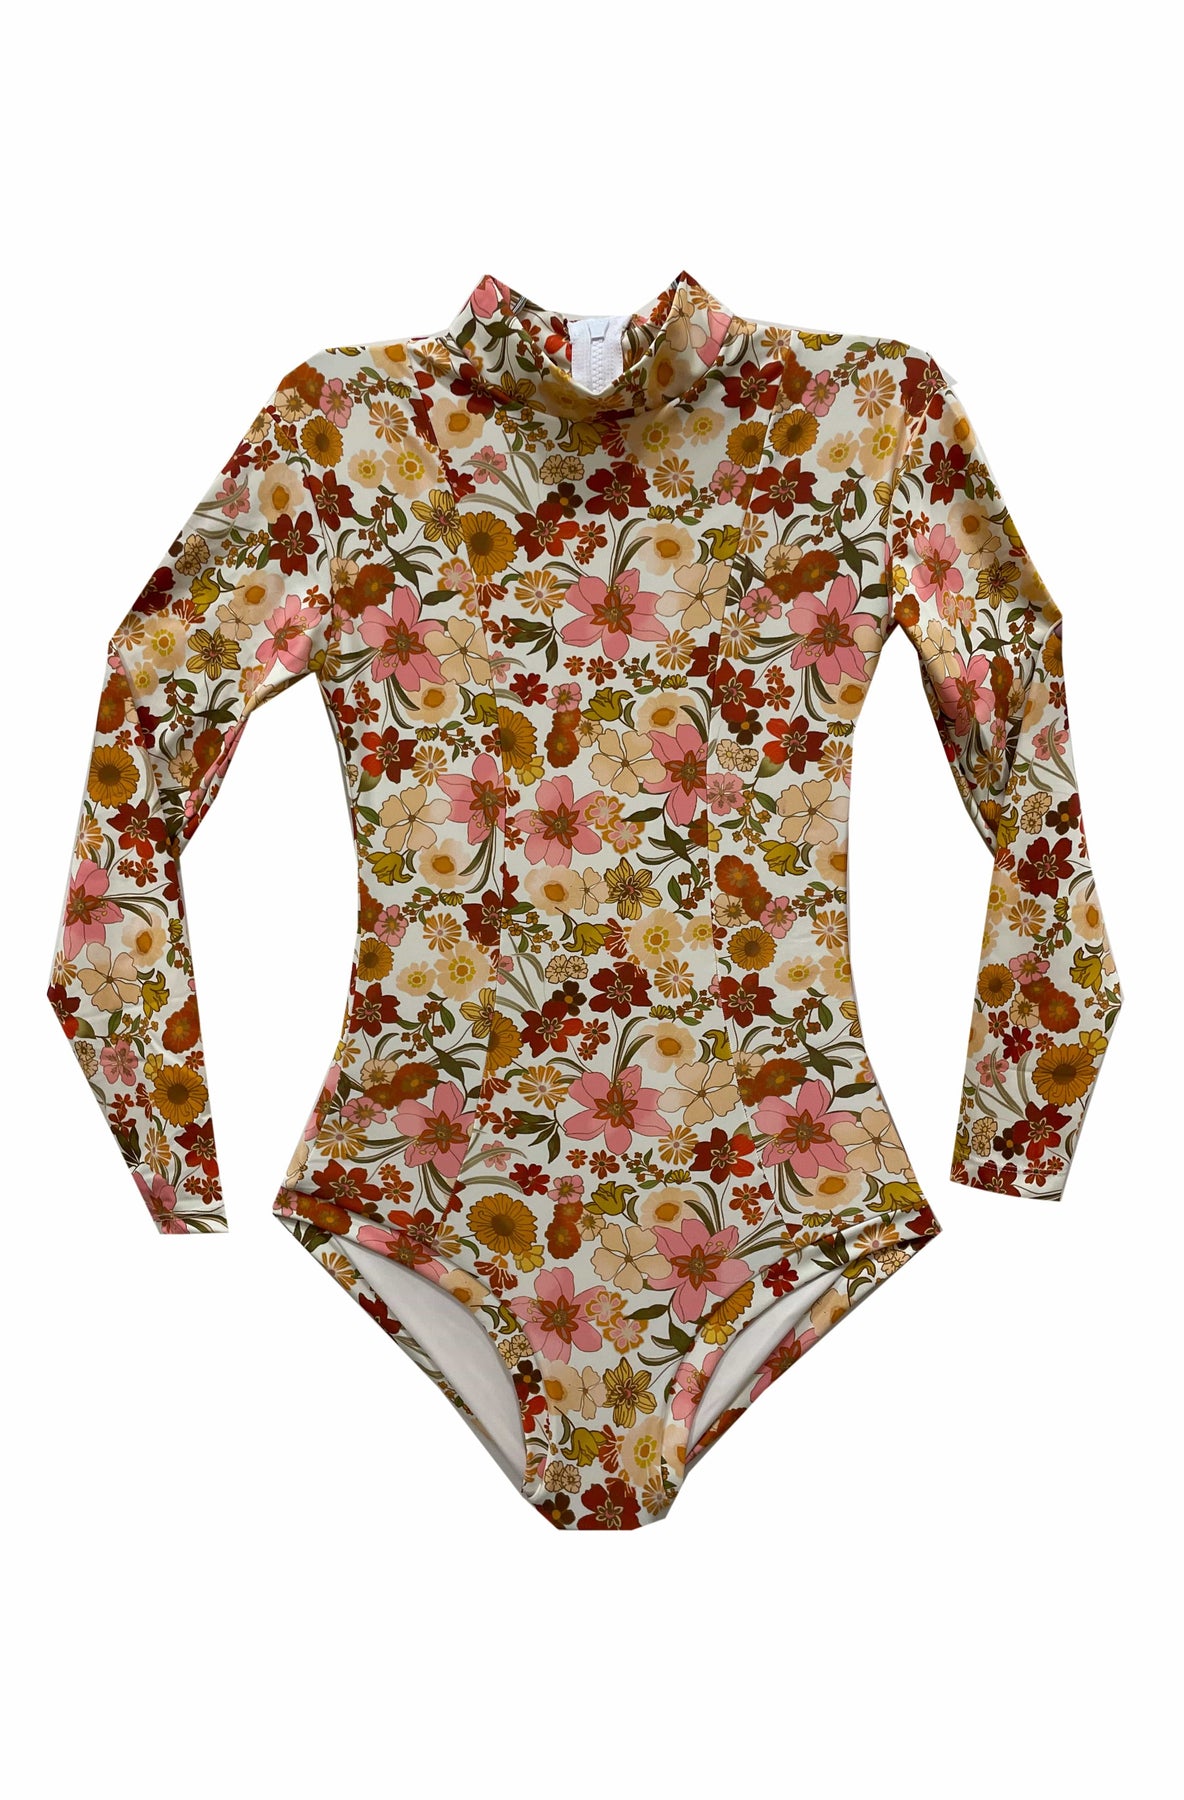 Adult Makena Surf Suit Full Coverage 70's Floral – Issa de' mar